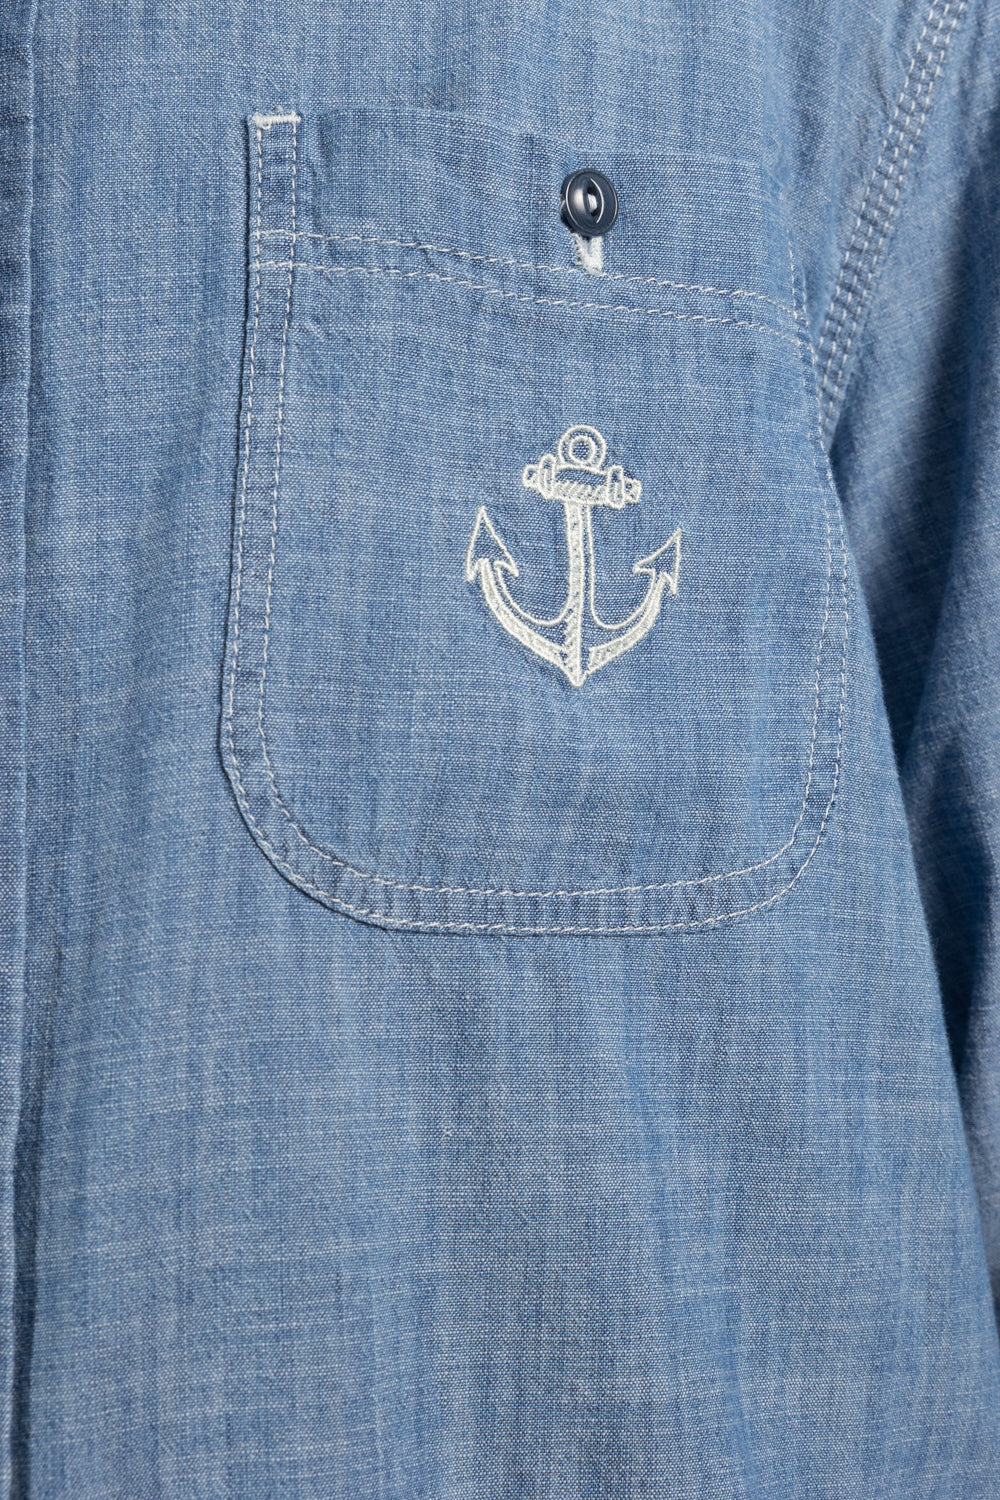 Mens Shirt | East Harbour Surplus Marshall shirt | The Standard STore